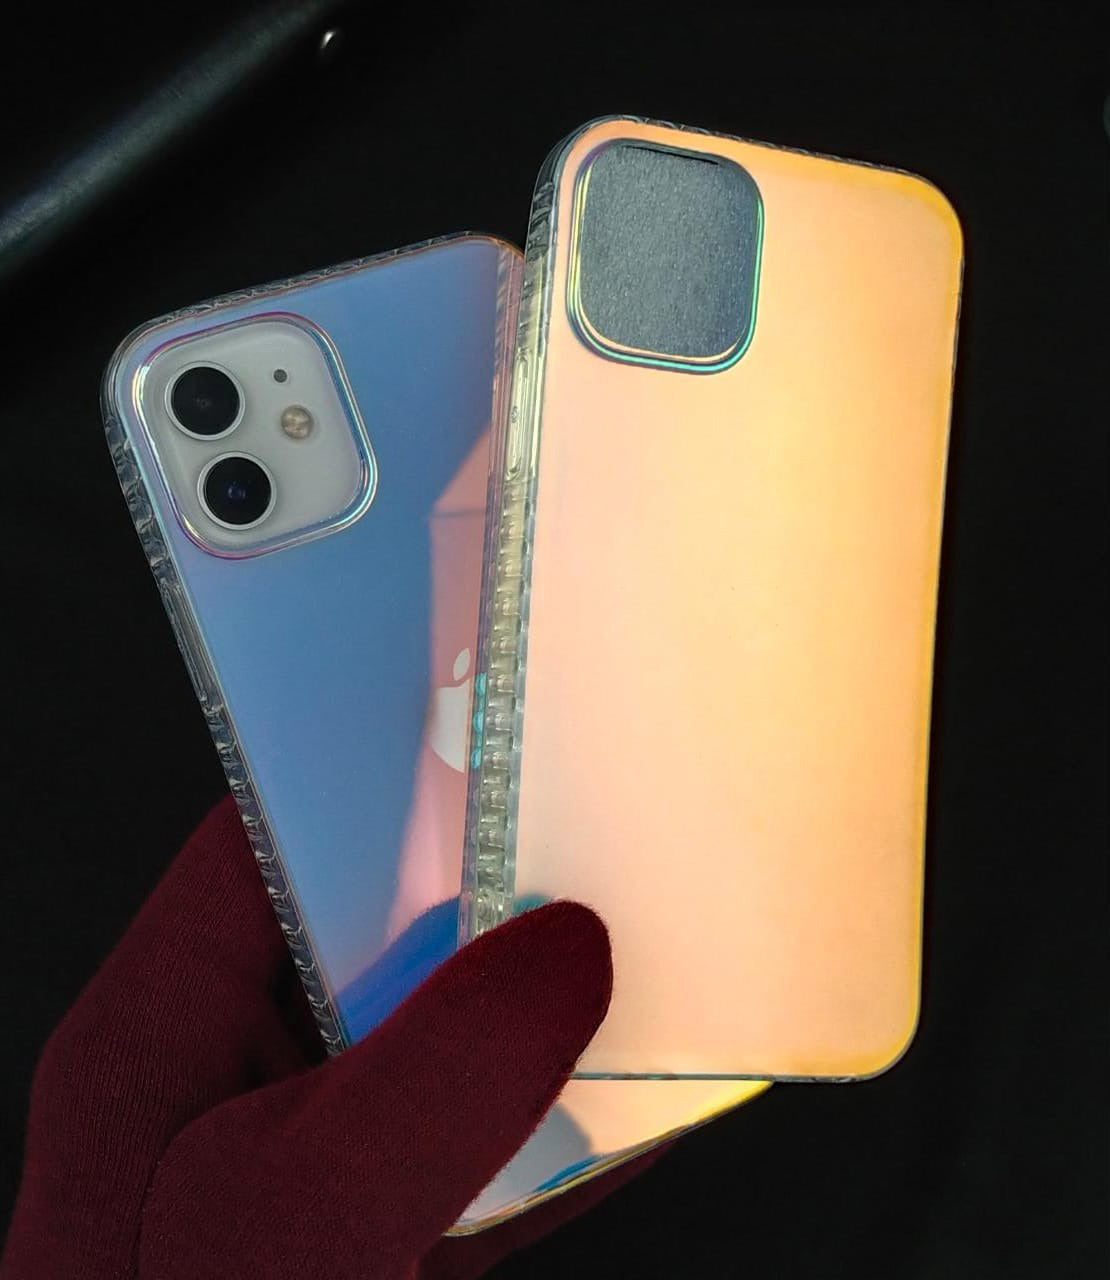 23101 Samsung's Transparent Shiny hard case |  Back Cover Case | Camera Protection Back Cover Case | Slim & Protective Design | Anti-Slip Grip (Transparent) | Matte & Shiny Hard Cover | For Man & Woman Cover